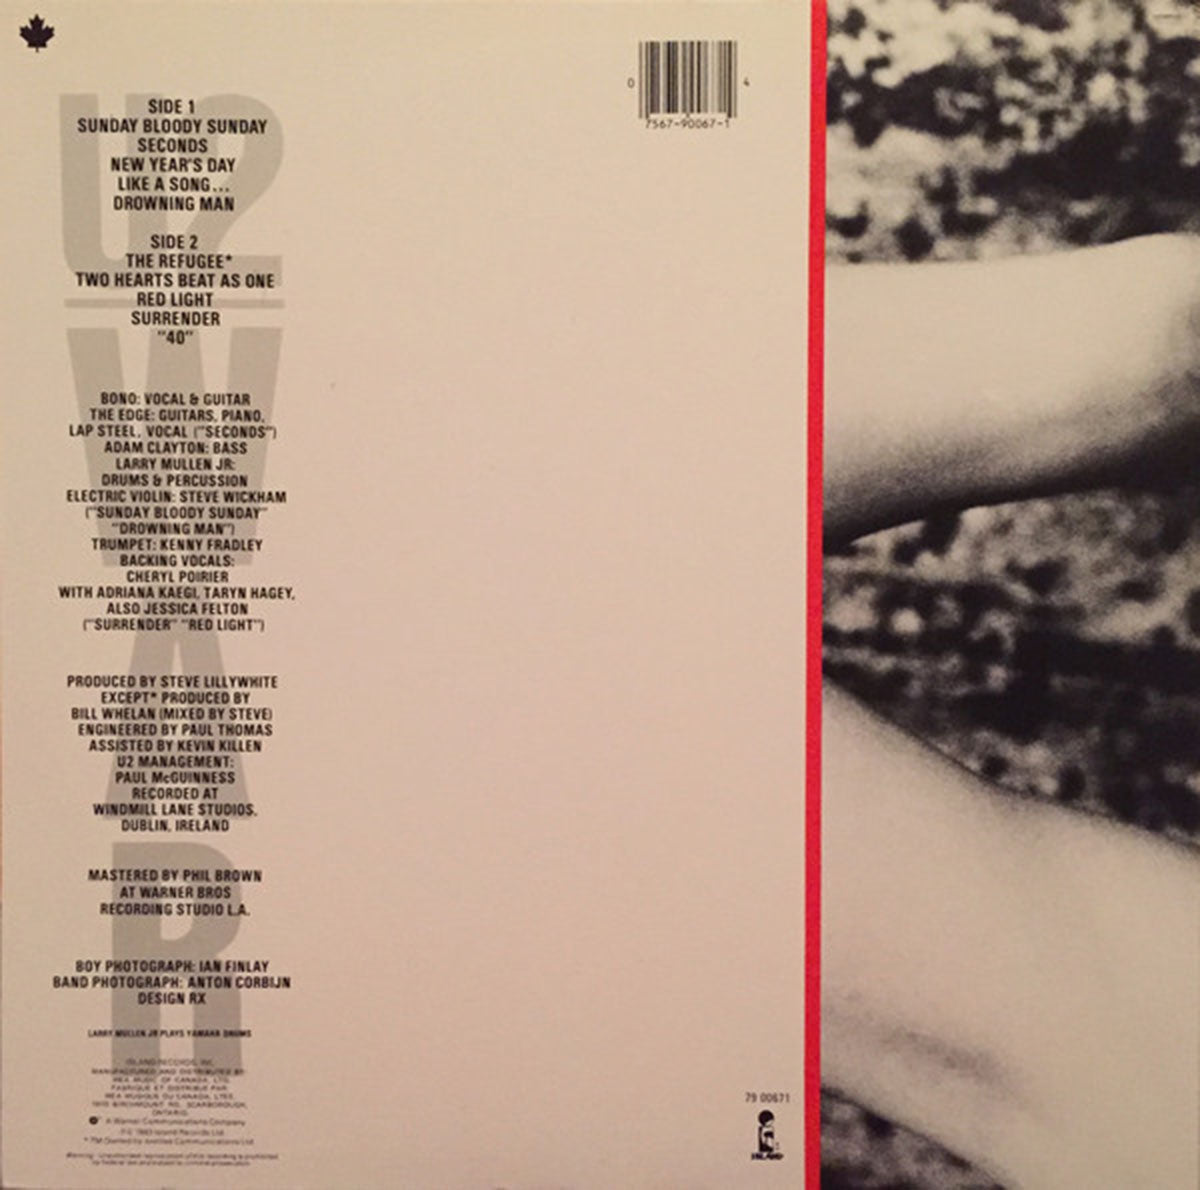 U2 - War (Vinyl)